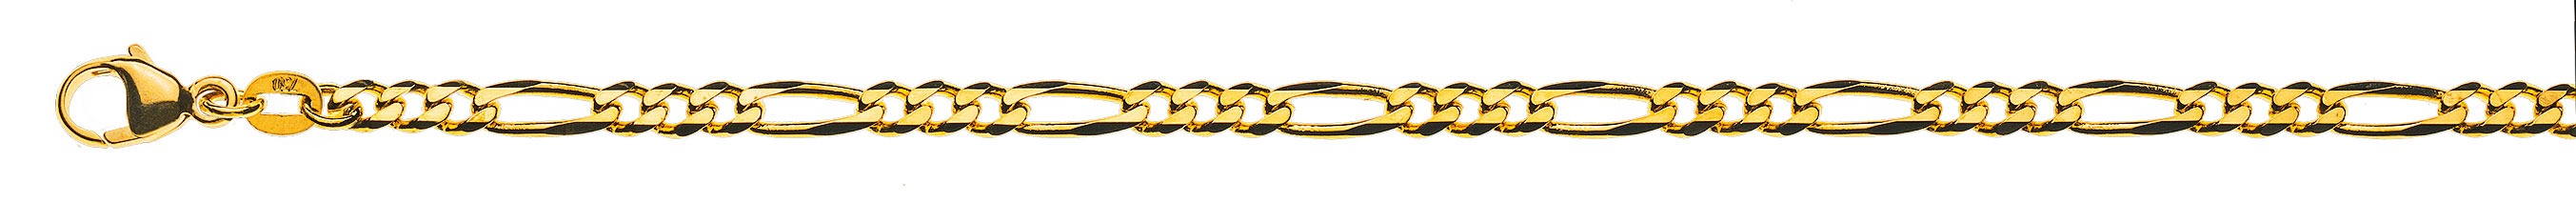 AURONOS Prestige Halskette Gelbgold 18K Figarokette 55cm 3.4mm